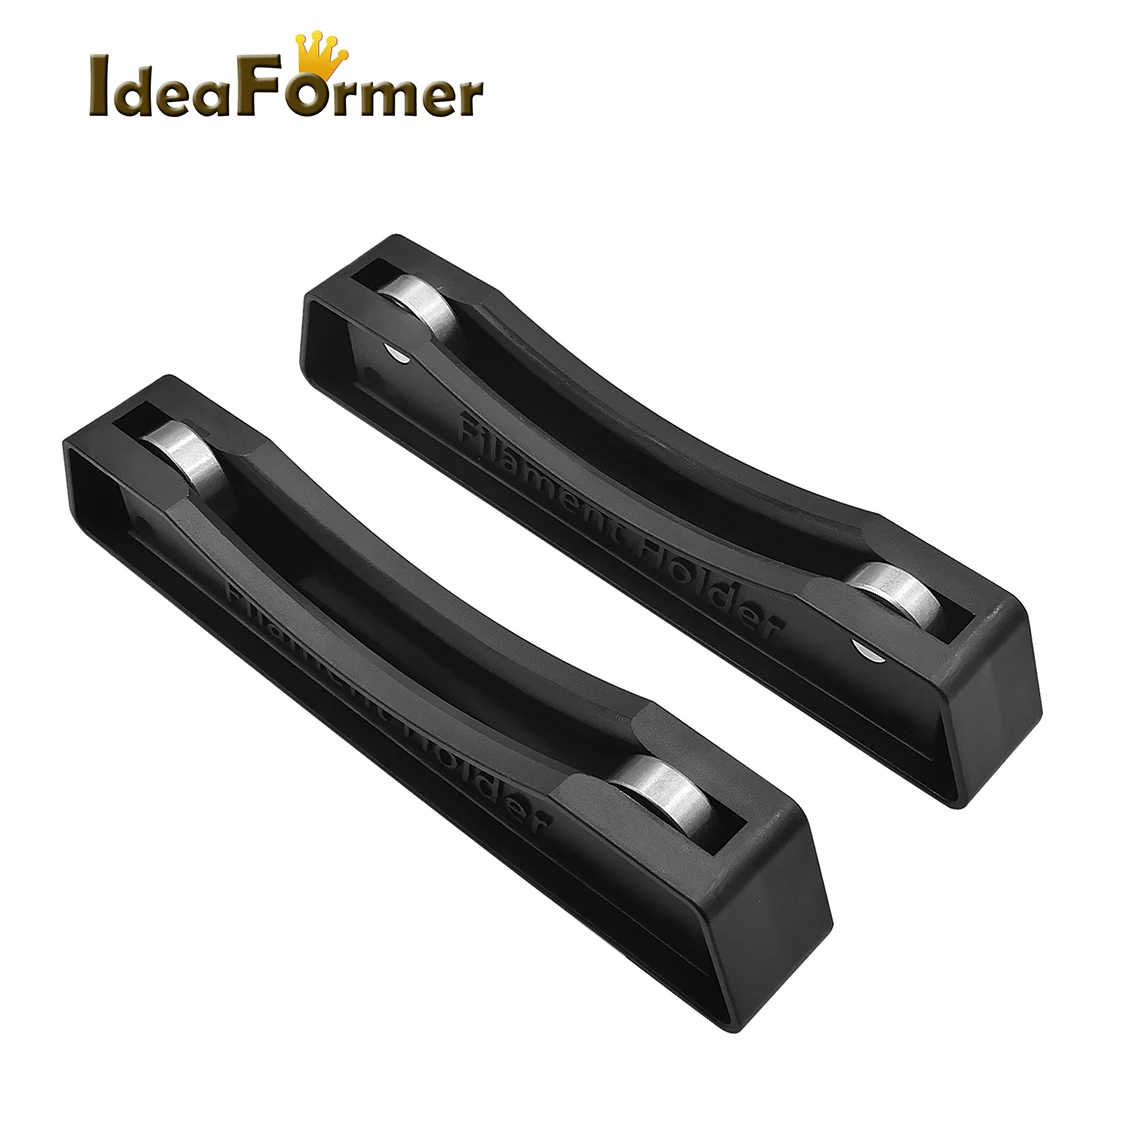 motor printer 3D Printer Filament Spool Holder Consumables  Shelves Supplies Fixed Seat For ABS PLA  PETG 3D Printing Material Rack Tray Black printerhead